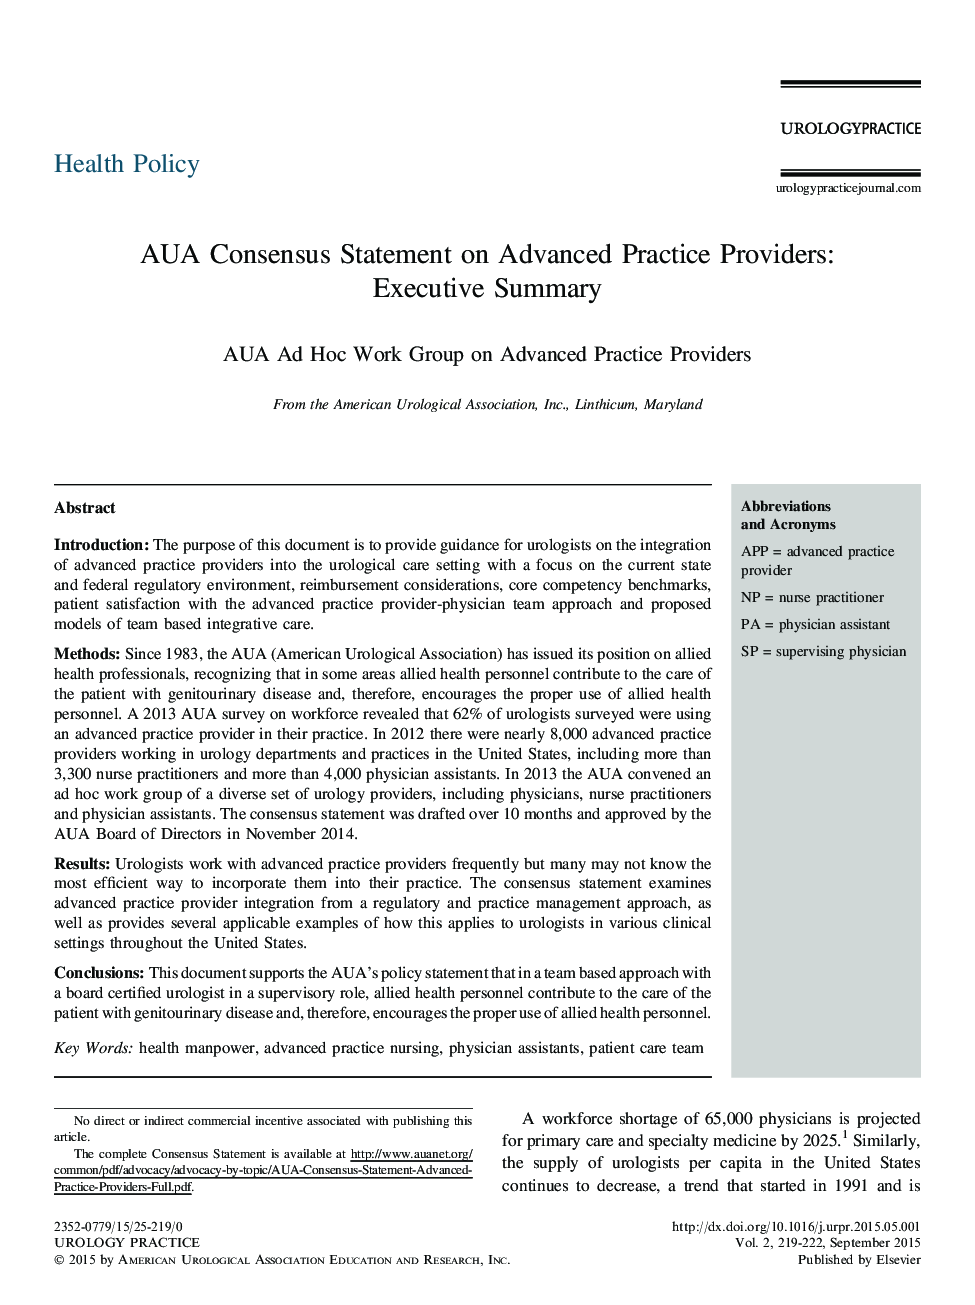 AUA Consensus Statement on Advanced Practice Providers: Executive Summary 